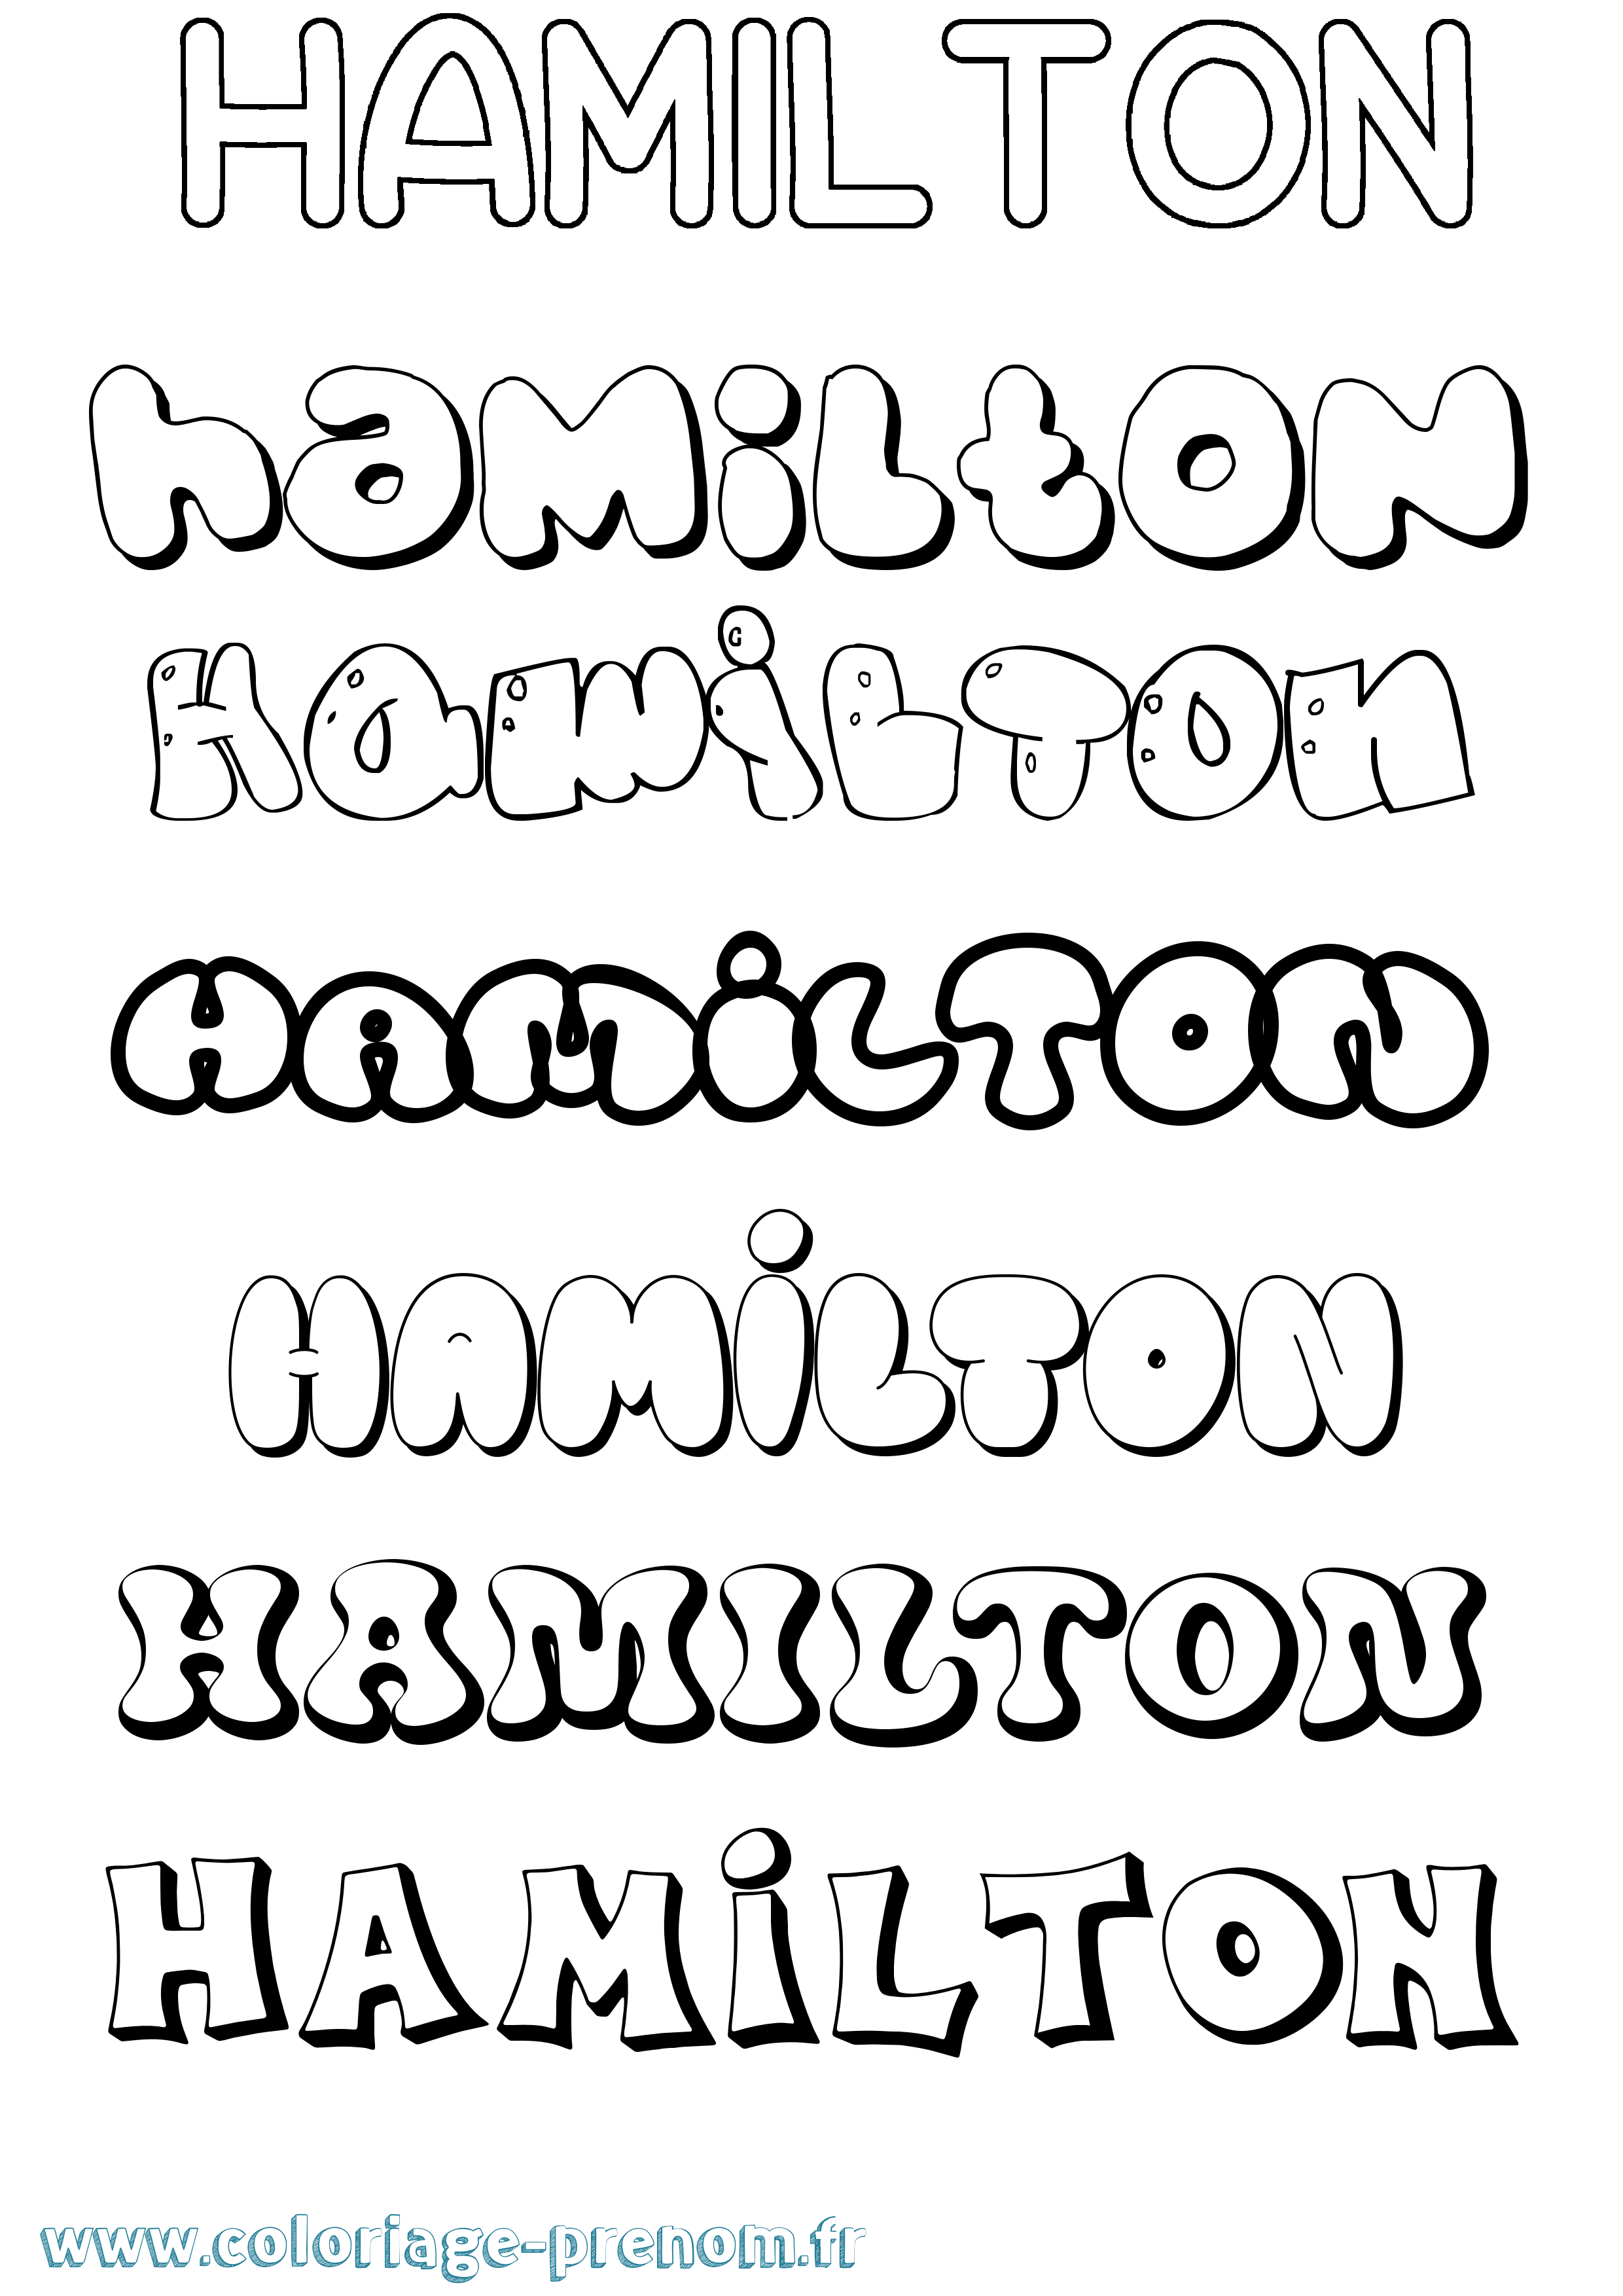 Coloriage prénom Hamilton Bubble